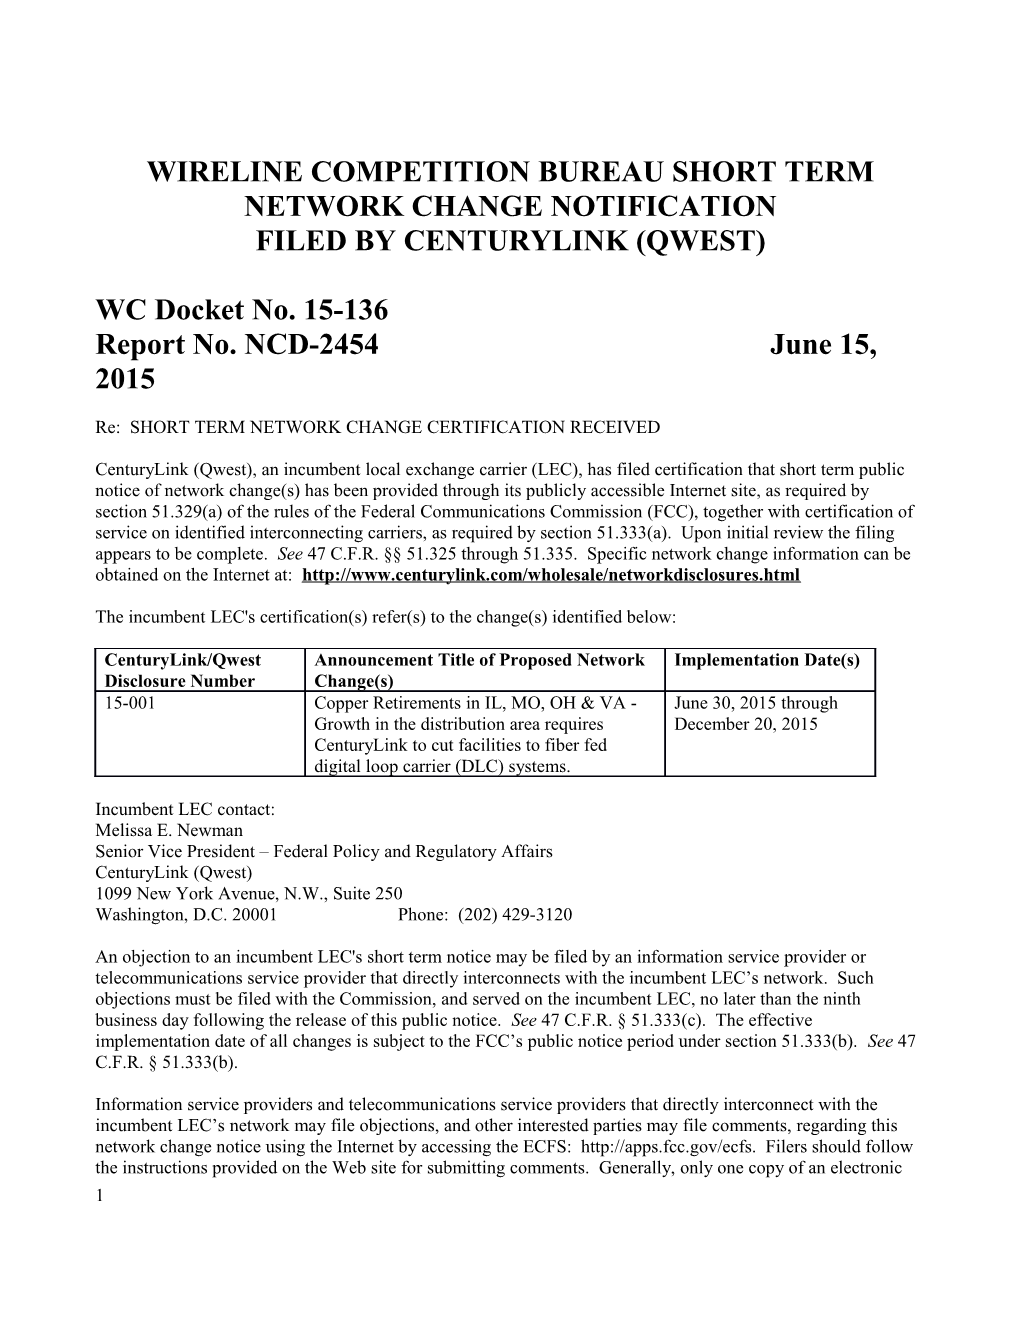 Wireline Competition Bureau Short Term Network Change Notification